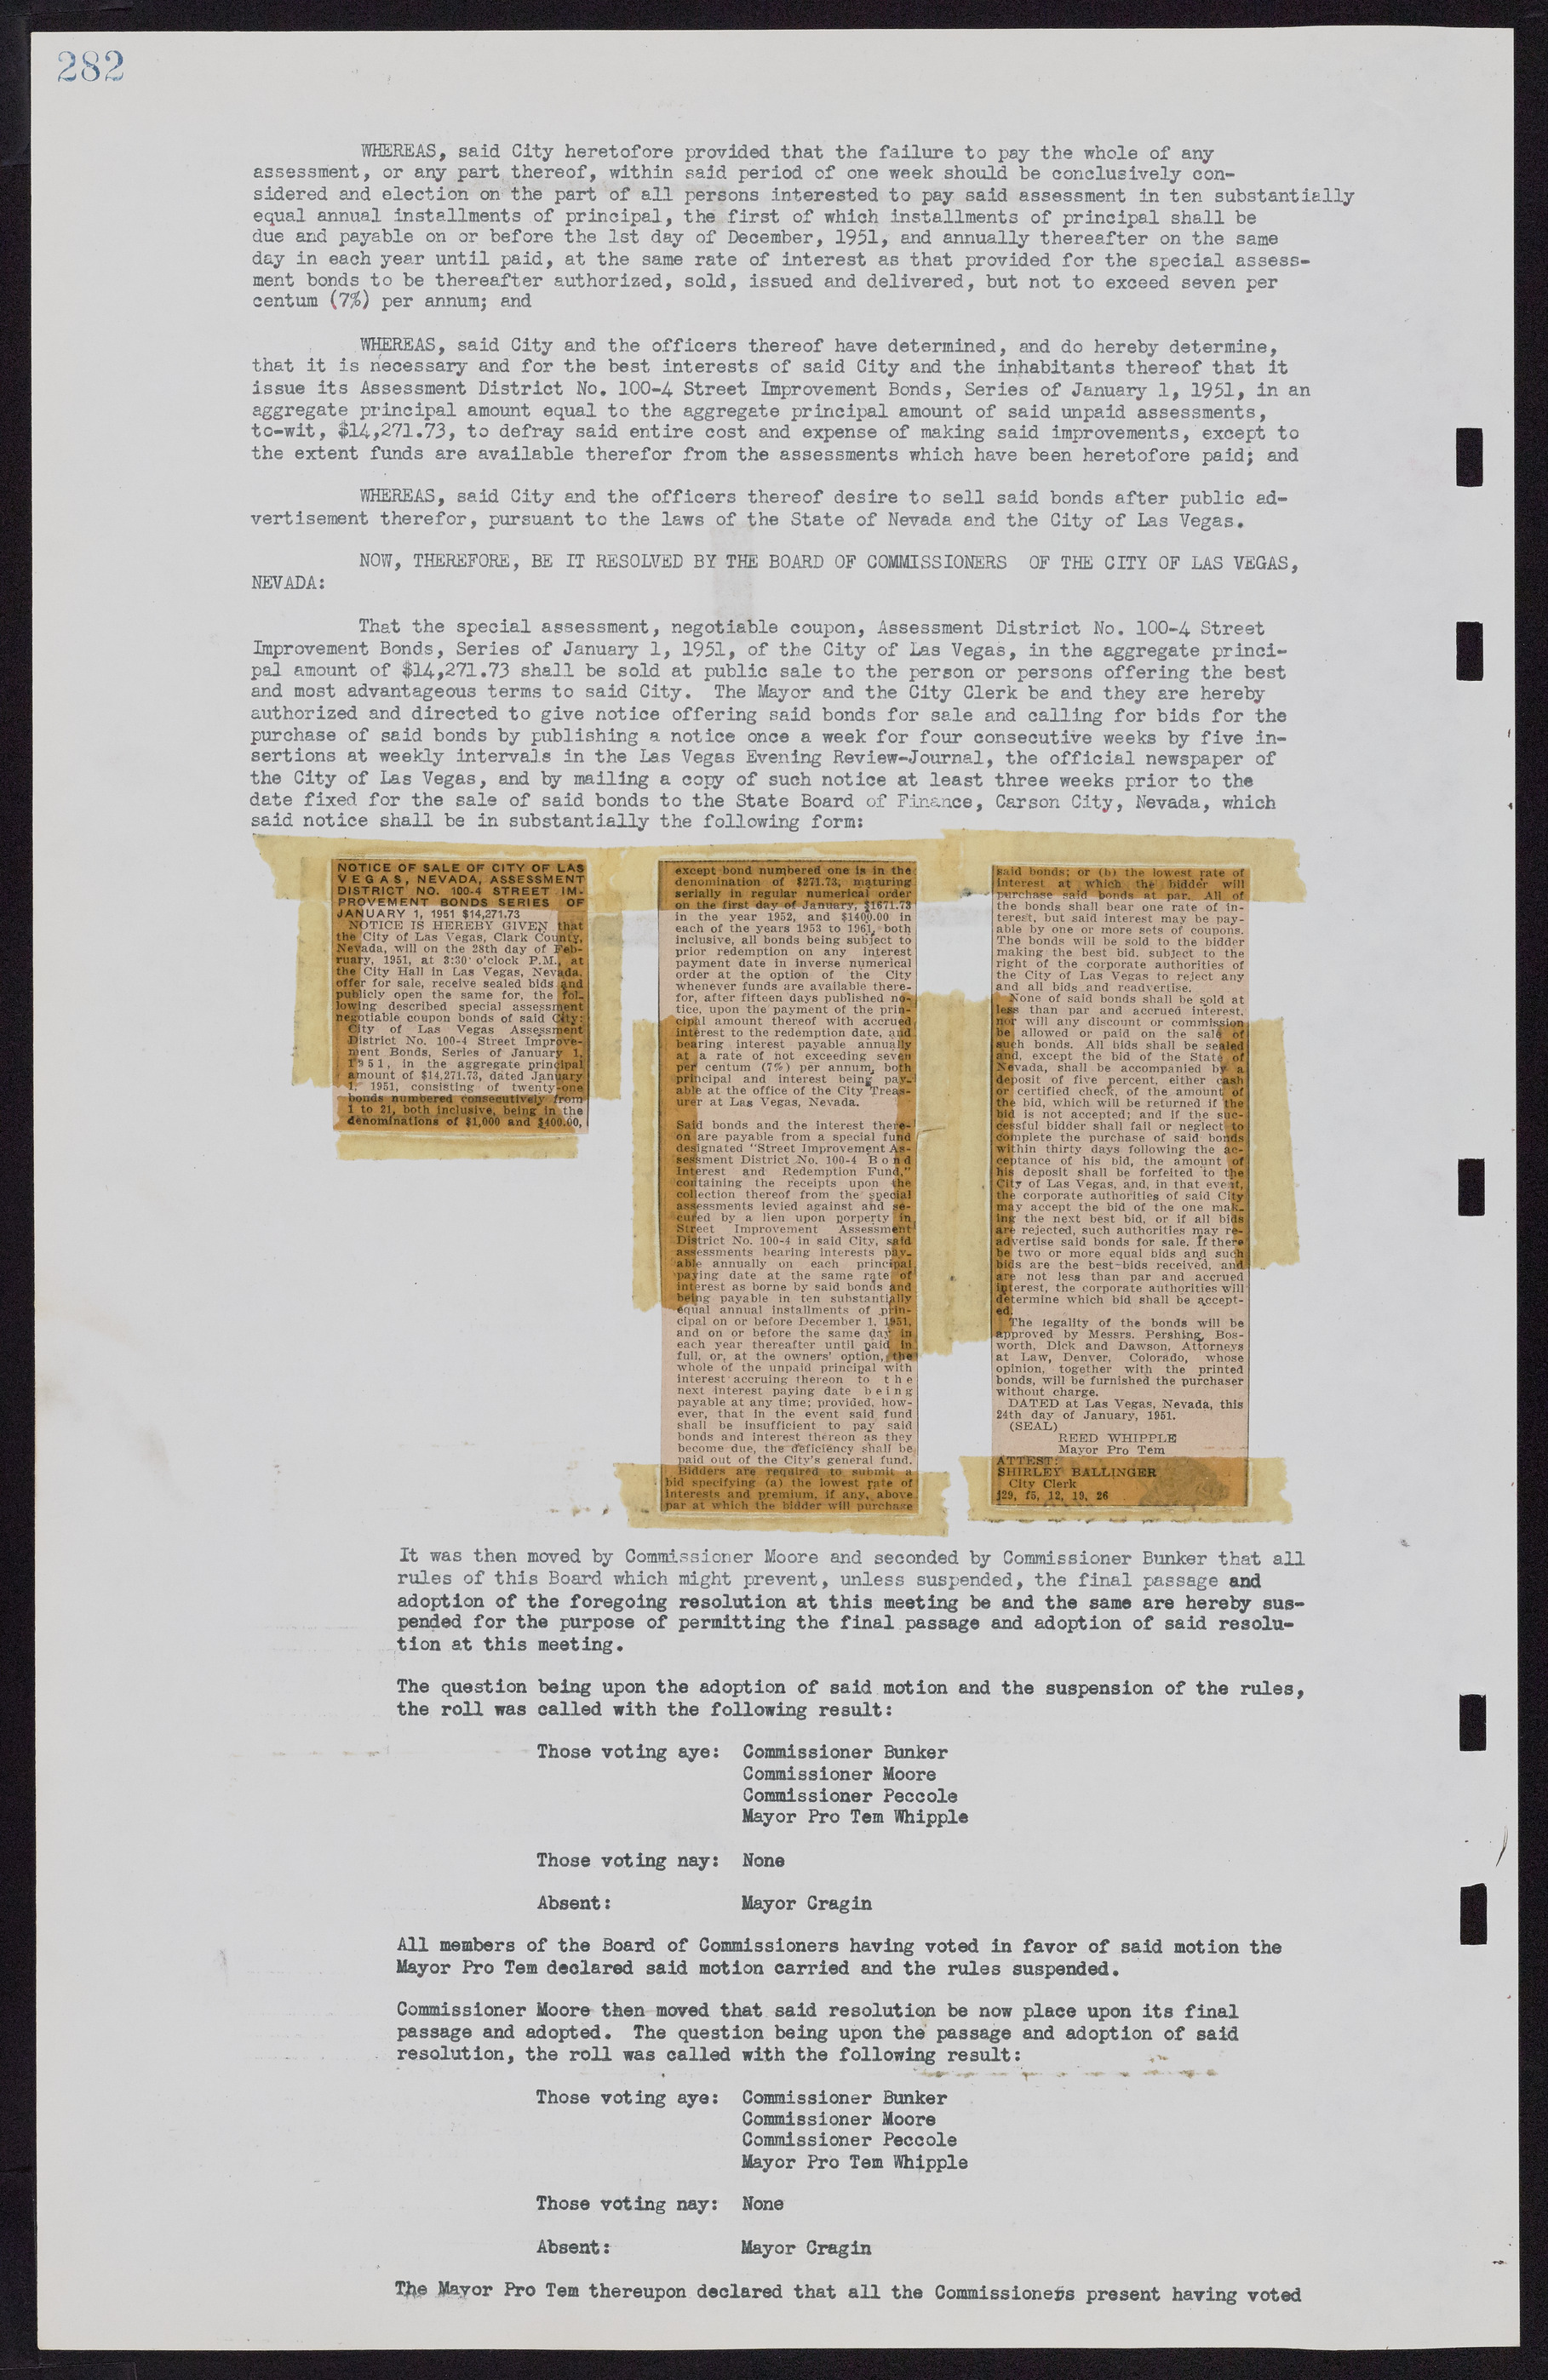 Las Vegas City Commission Minutes, November 7, 1949 to May 21, 1952, lvc000007-294